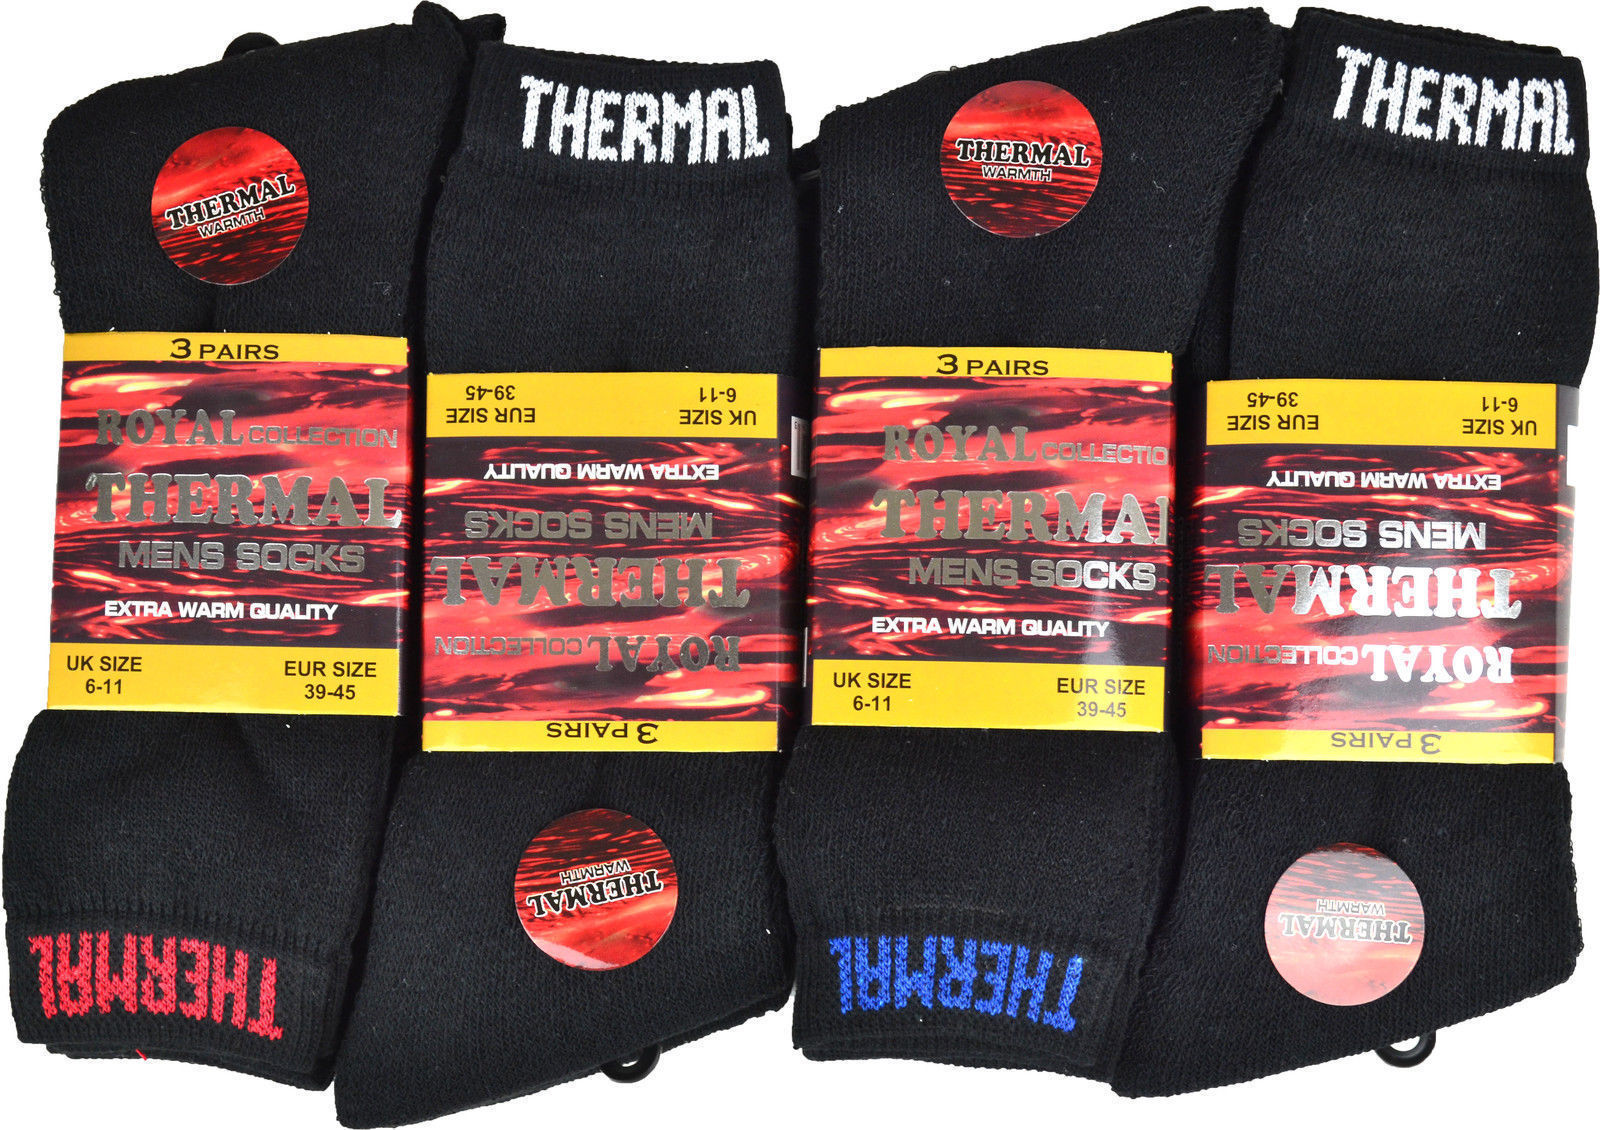  12 Pairs Men's Black Thermal Socks, Thick Warm Work Boot Socks Size 6-11